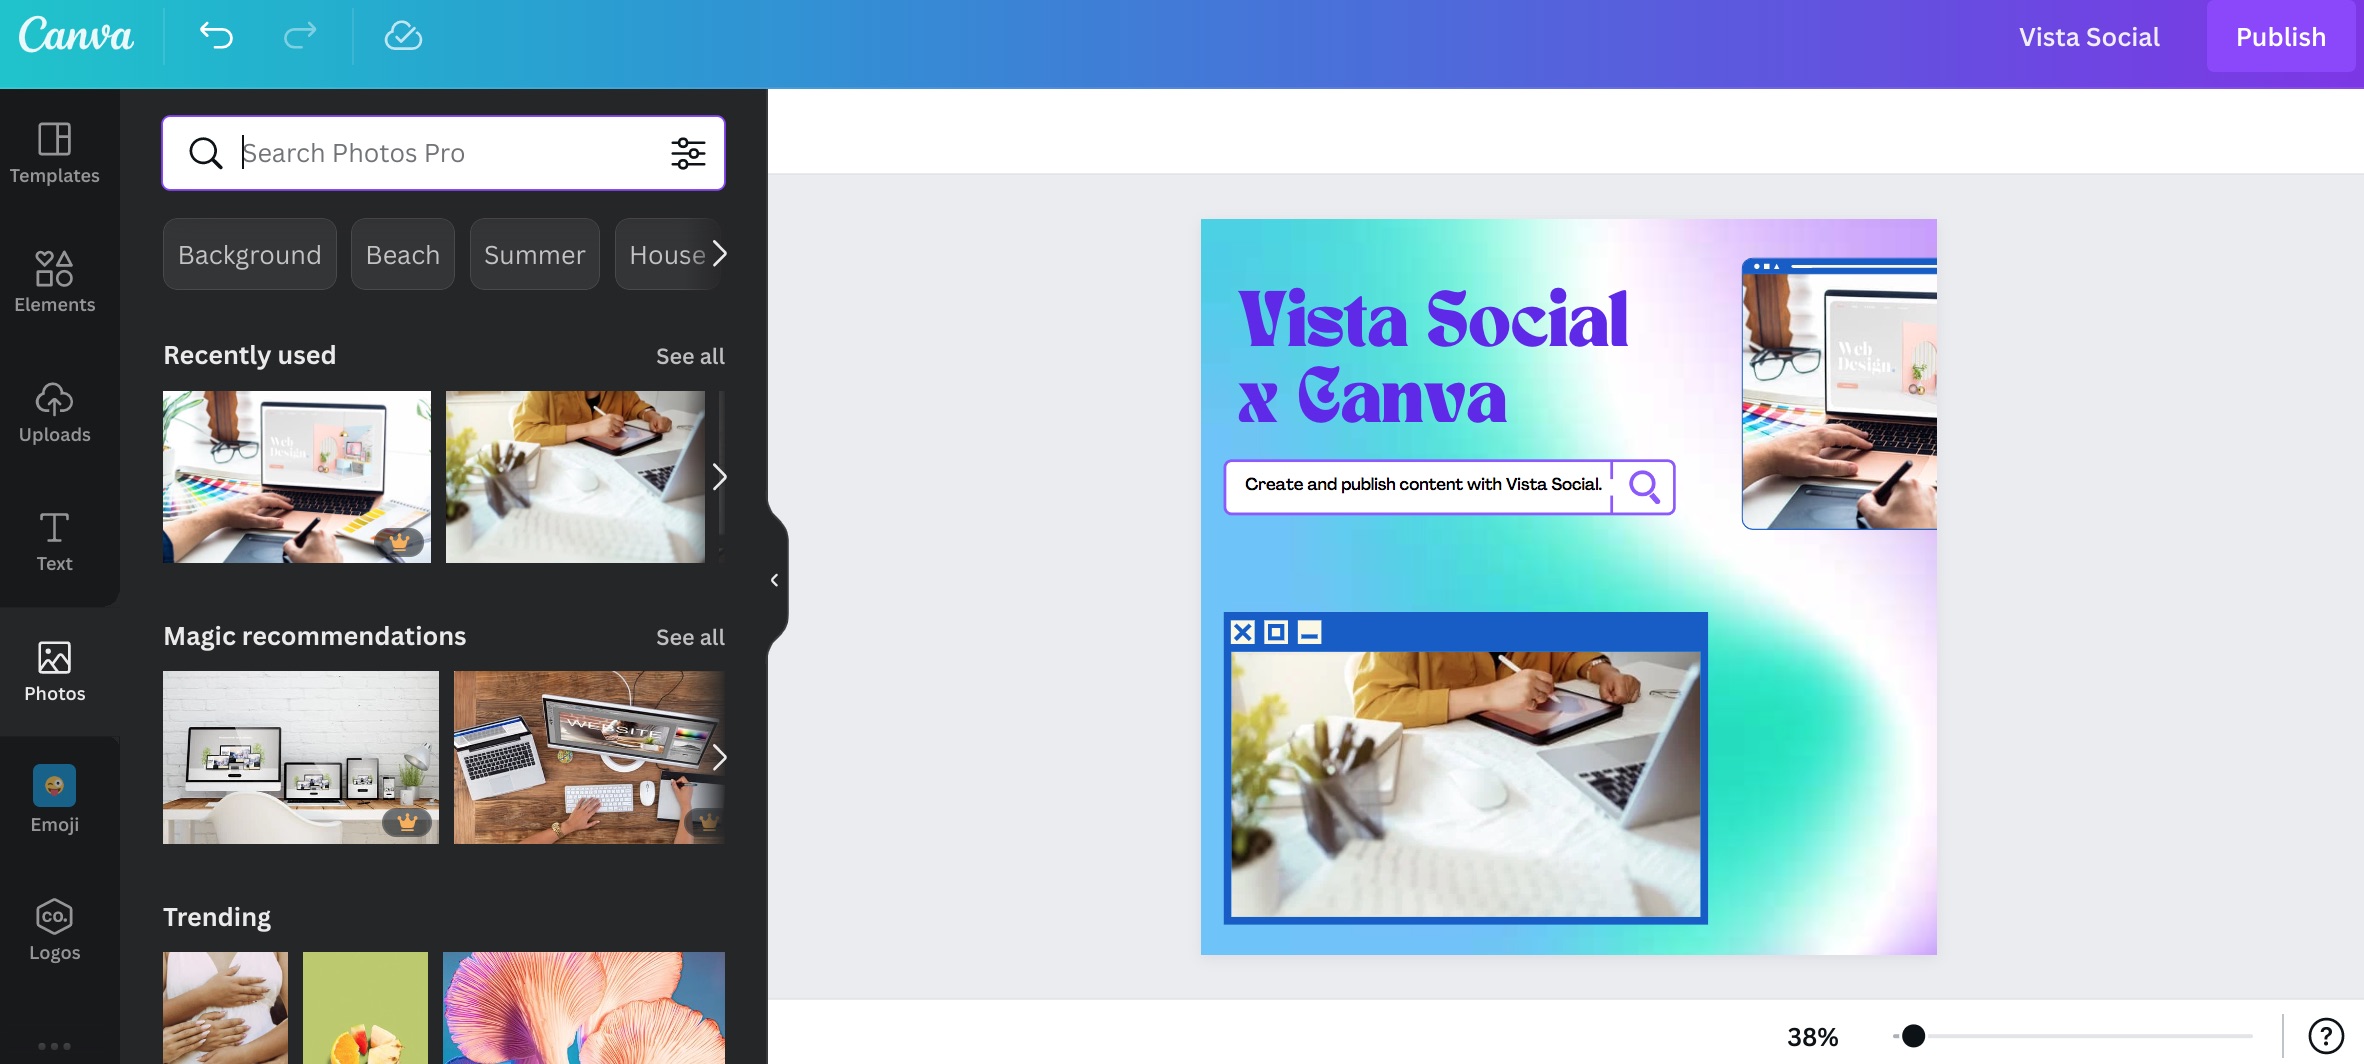 Digital Marketing HD Images | Vista Social and Canva 